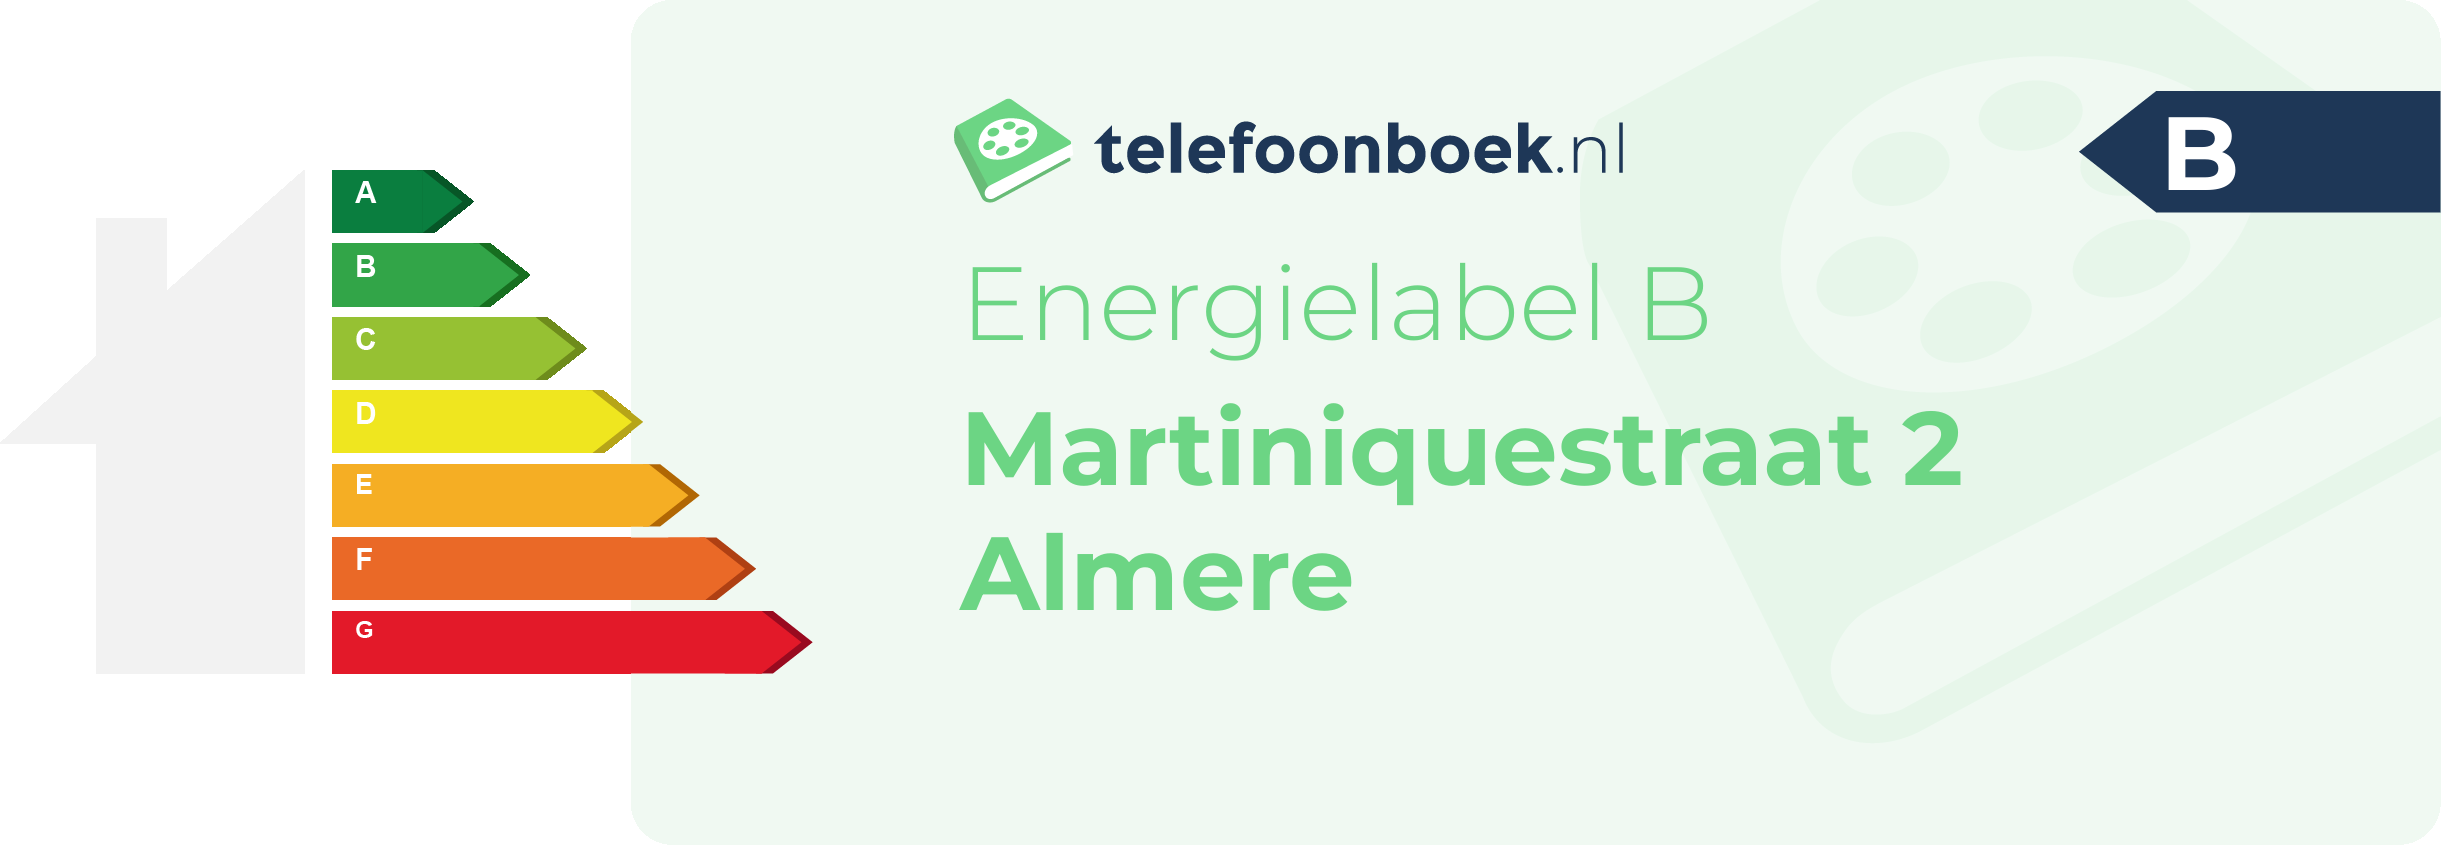 Energielabel Martiniquestraat 2 Almere